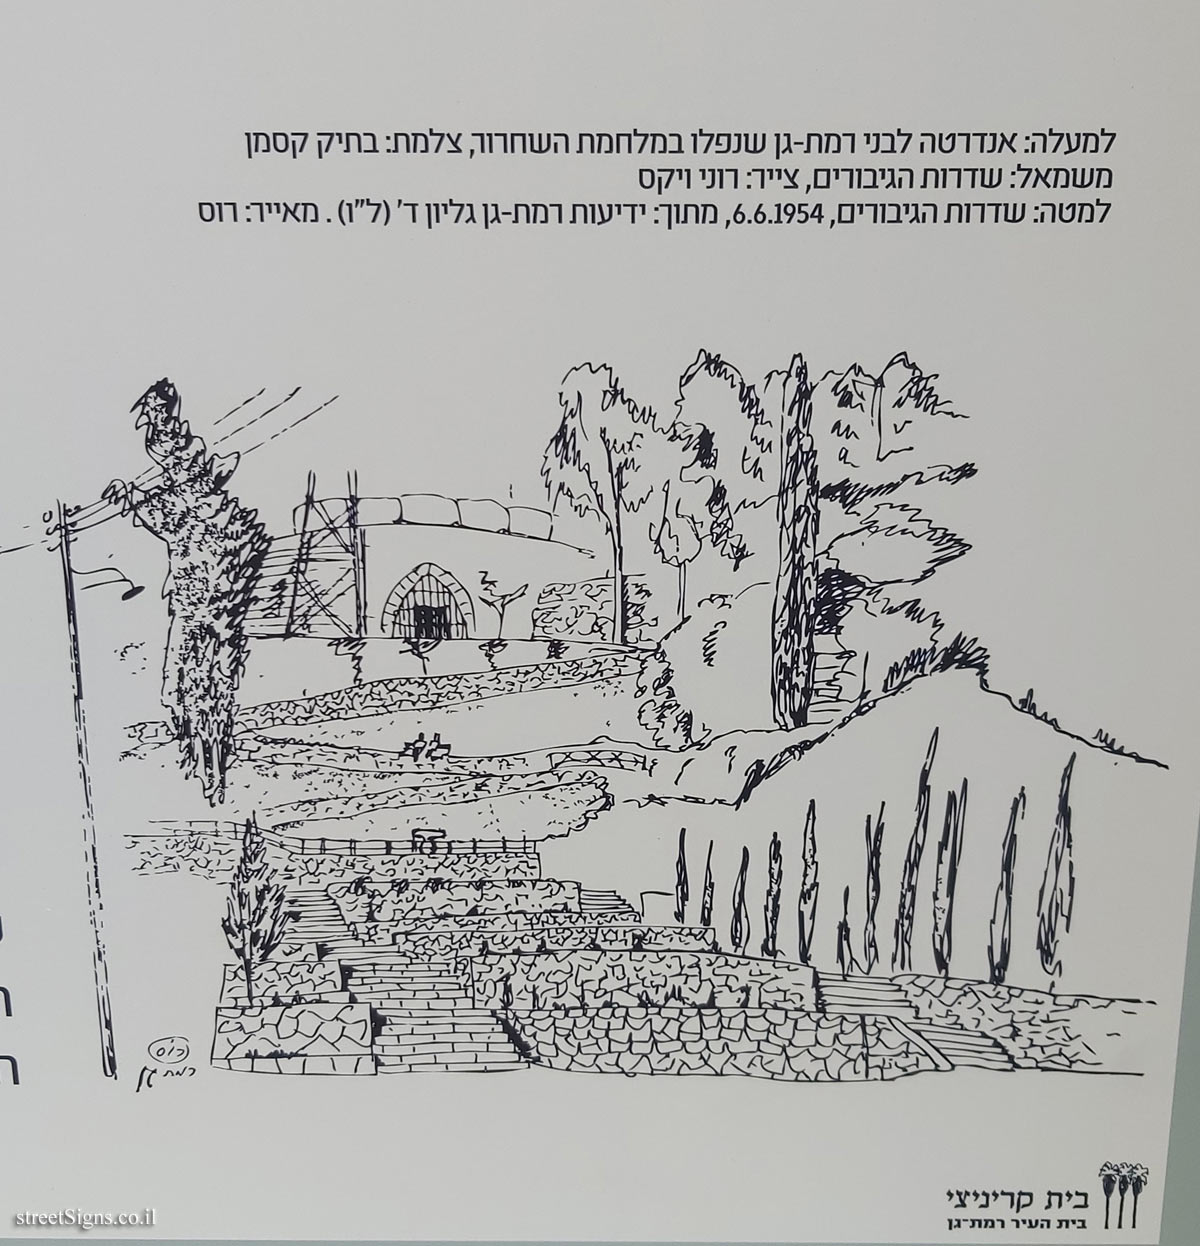 Ramat Gan - Open Exhibition - The monument - Moshe Sharet St 38, Ramat Gan, Israel